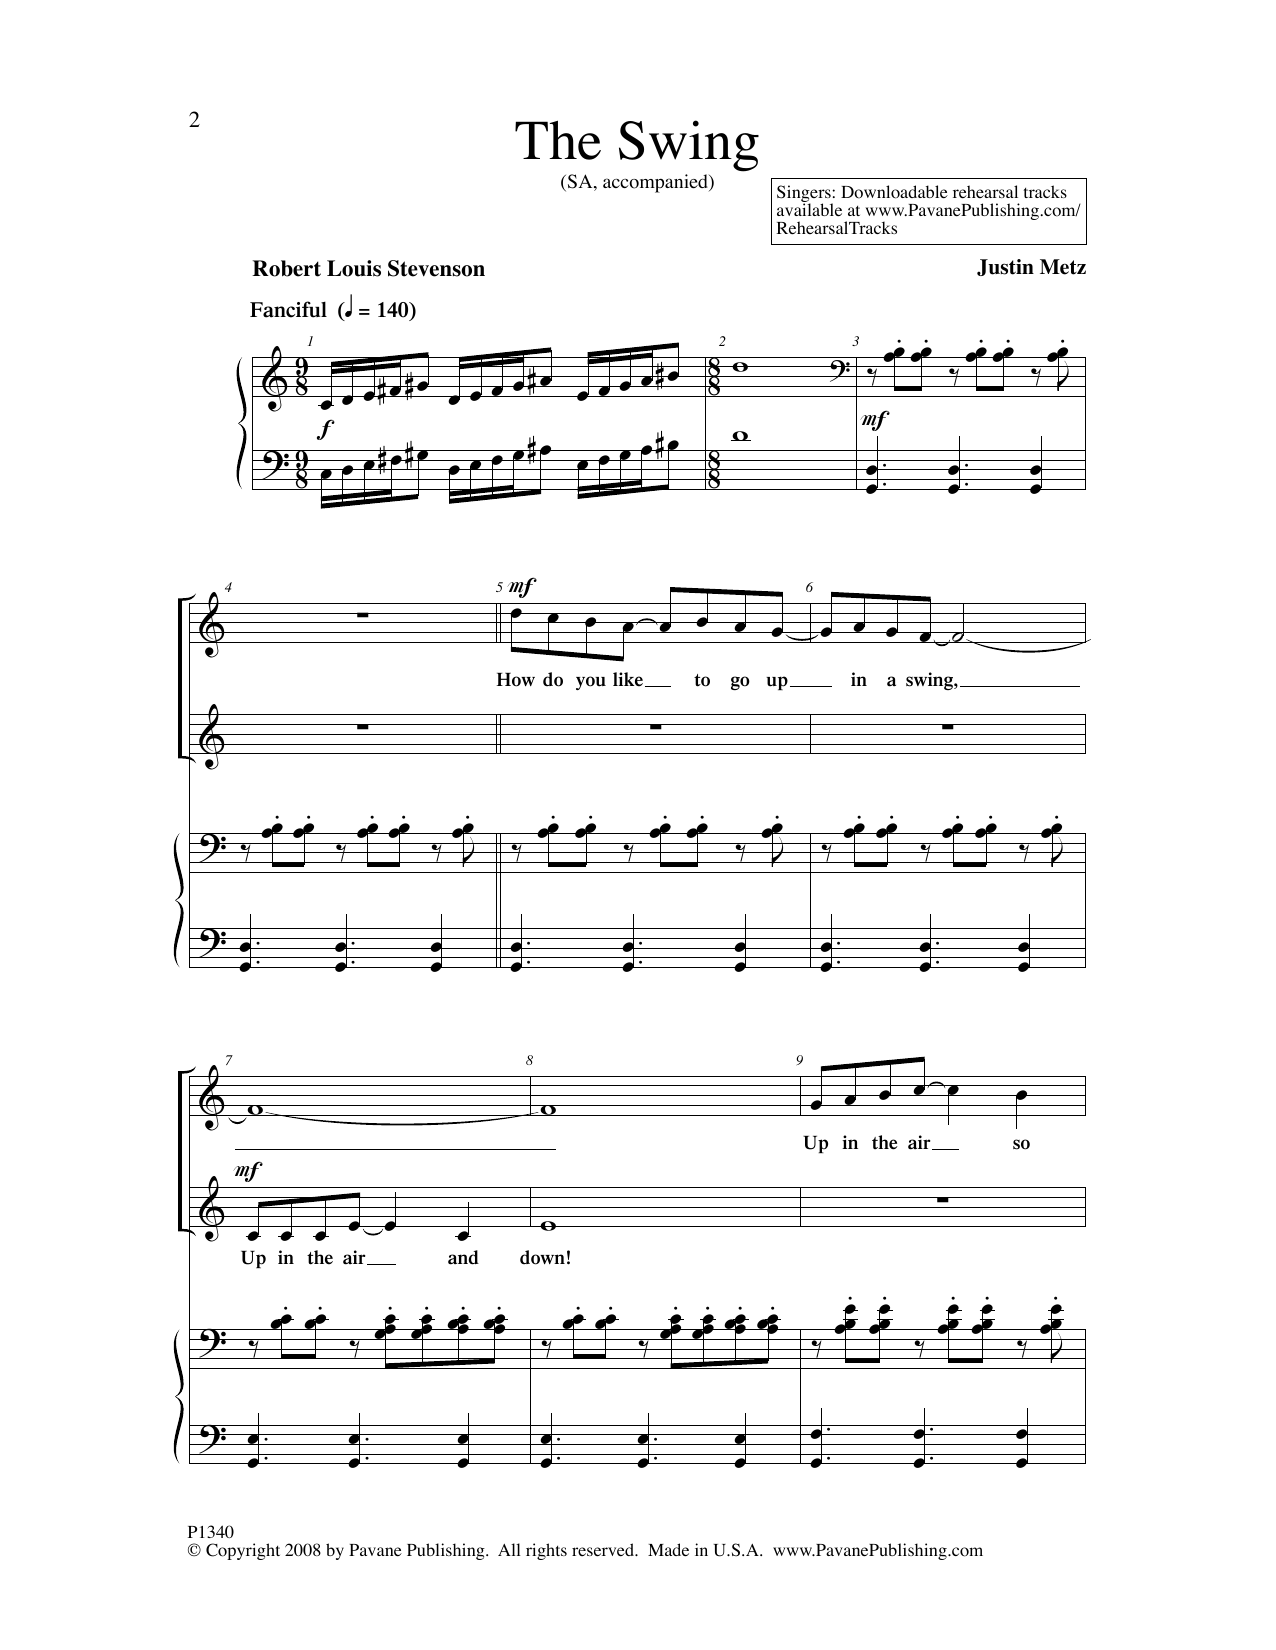 Justin Metz The Swing Sheet Music Pdf Notes Chords Concert Score 2 Part Choir Download